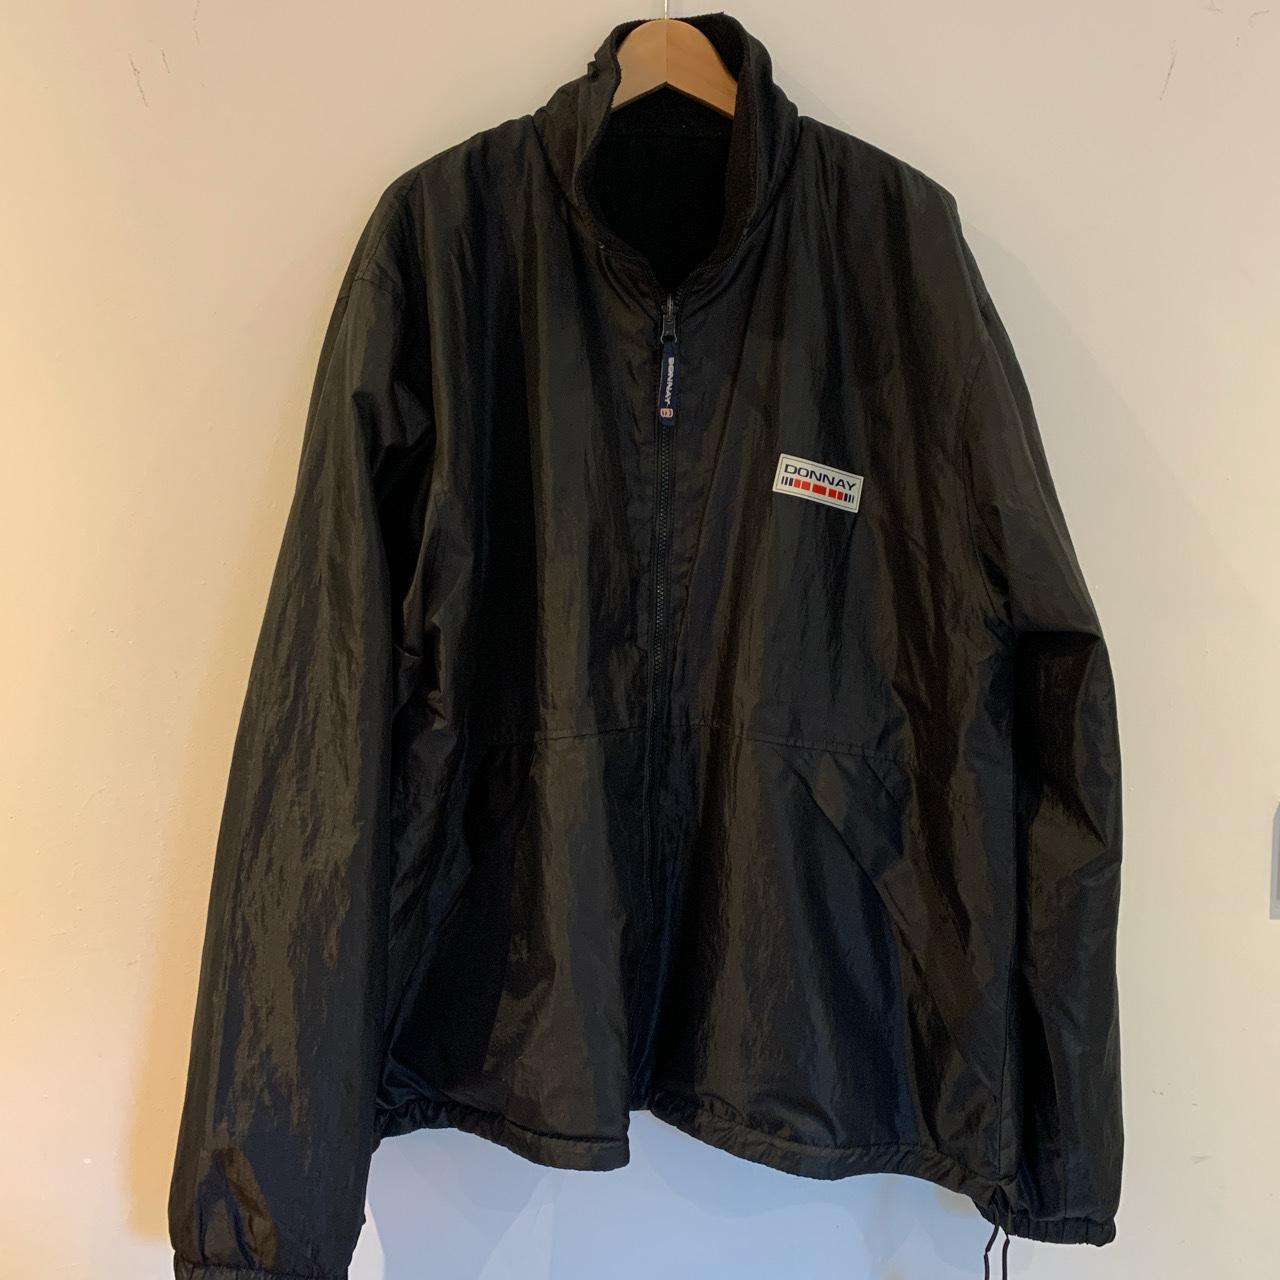 Reversible Black Sports Jacket / Coat Donnay... - Depop